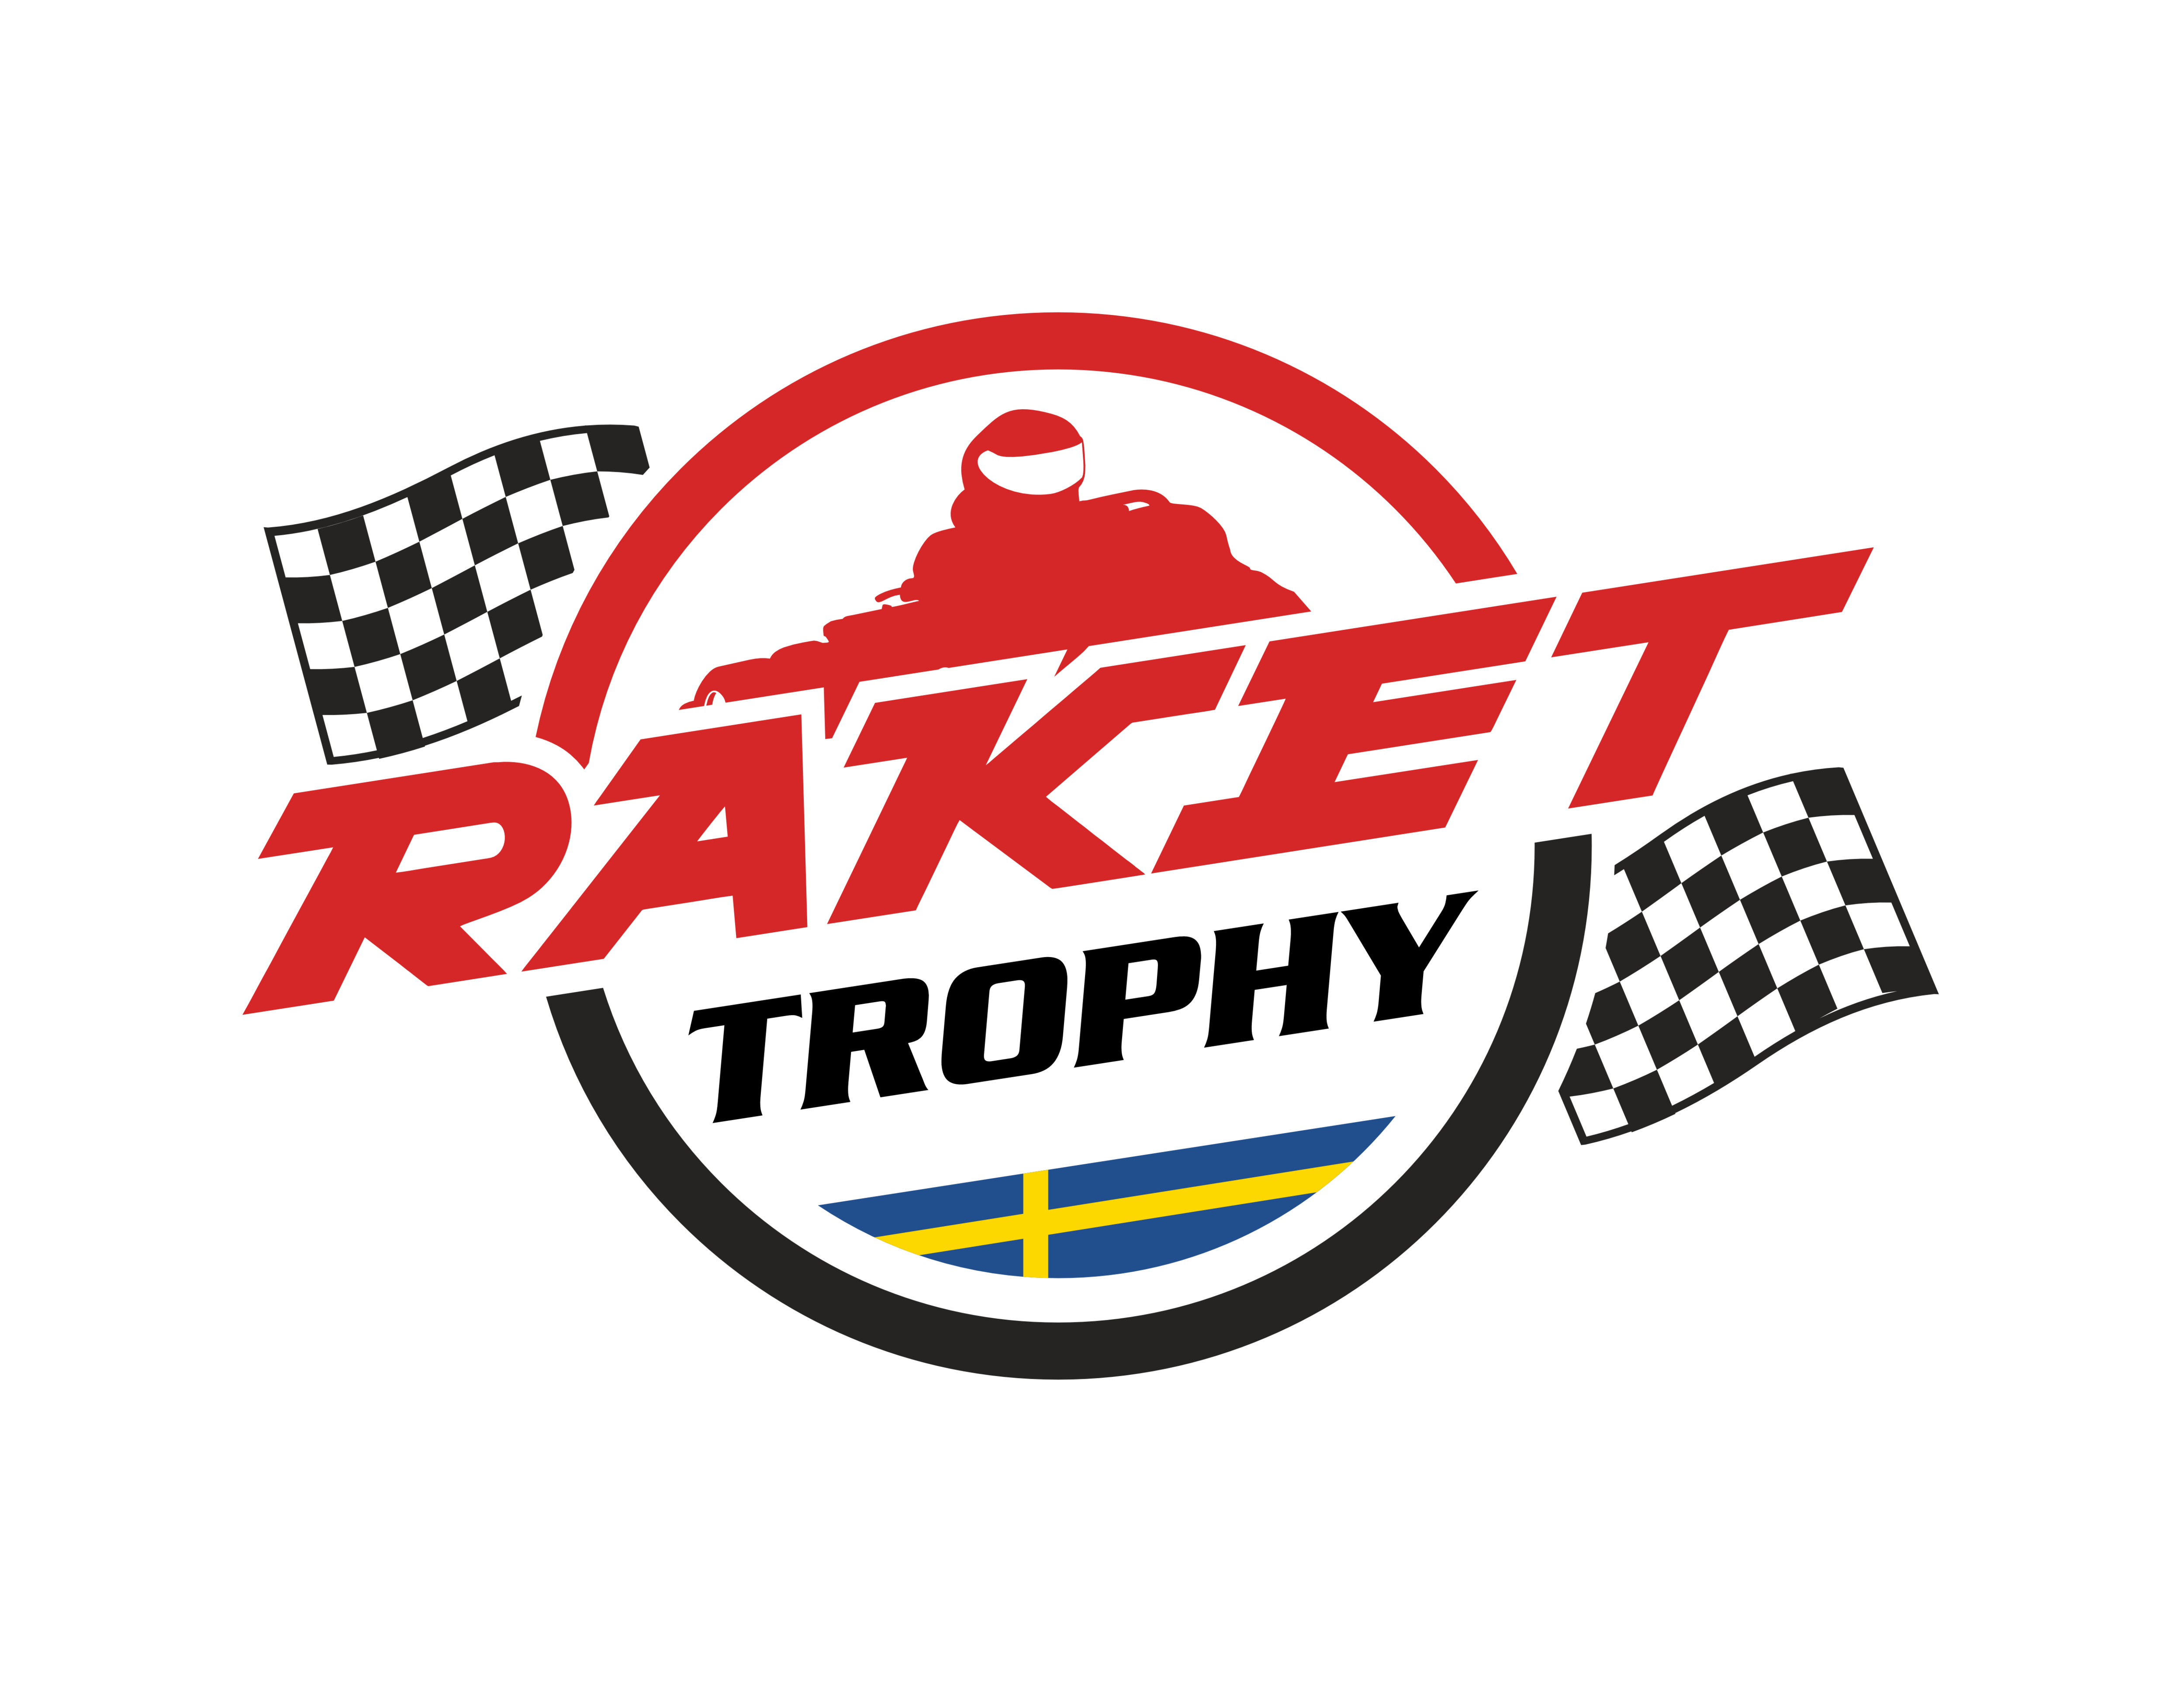 Raket Trophy logo for download in vector format